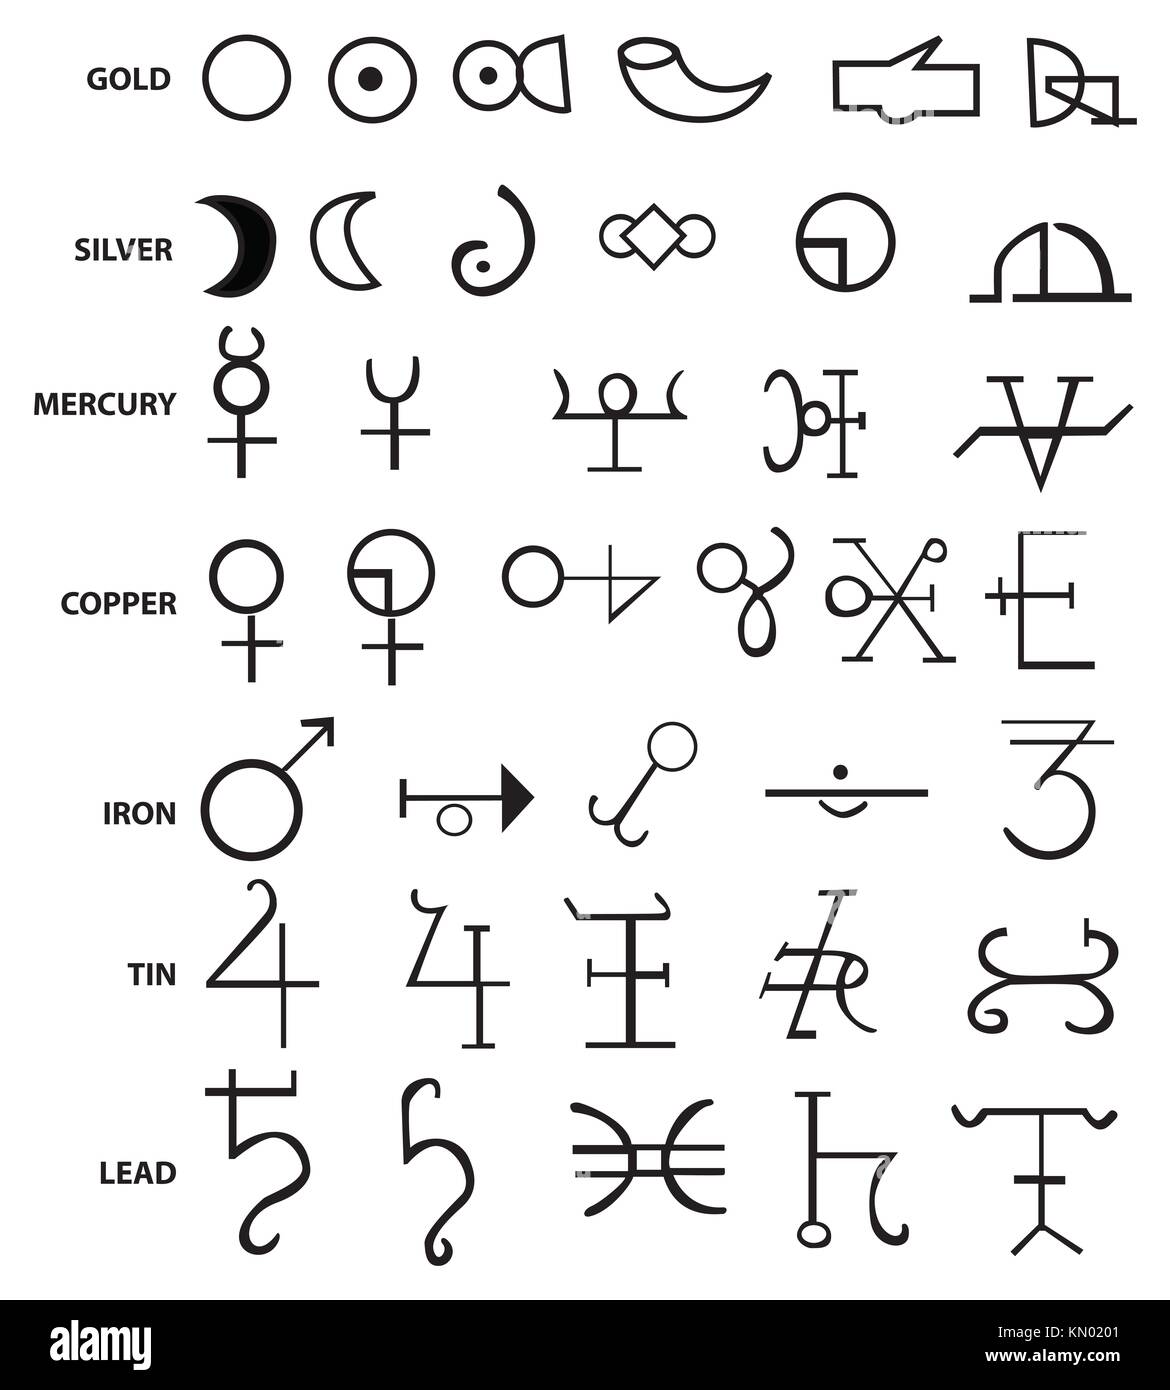 Five Alchemical Symbols Temporary Tattoo Set of 3  Small Tattoos